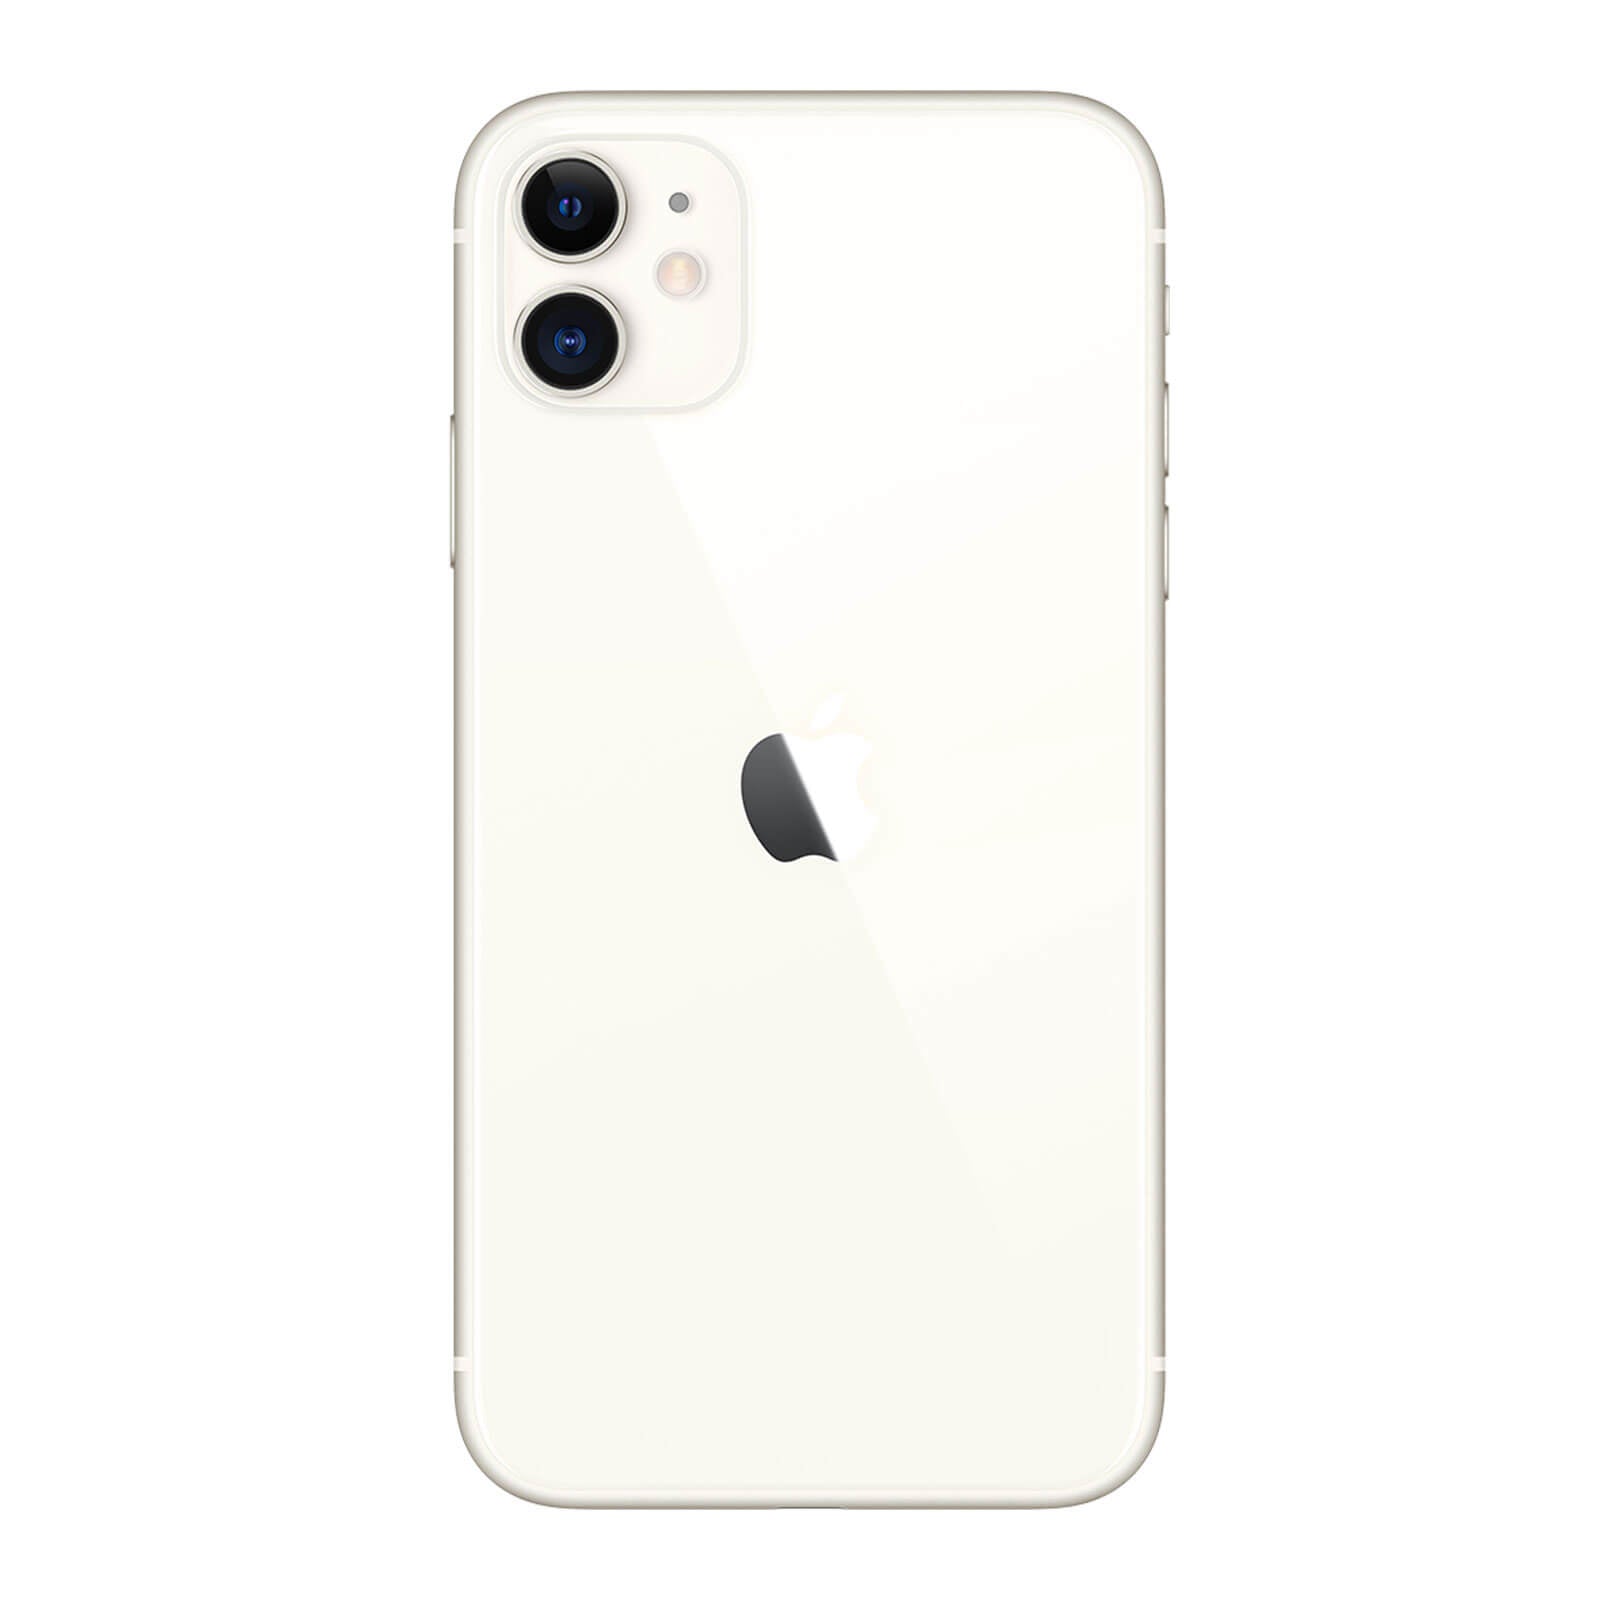 Apple iPhone 11 256GB White Good - Verizon